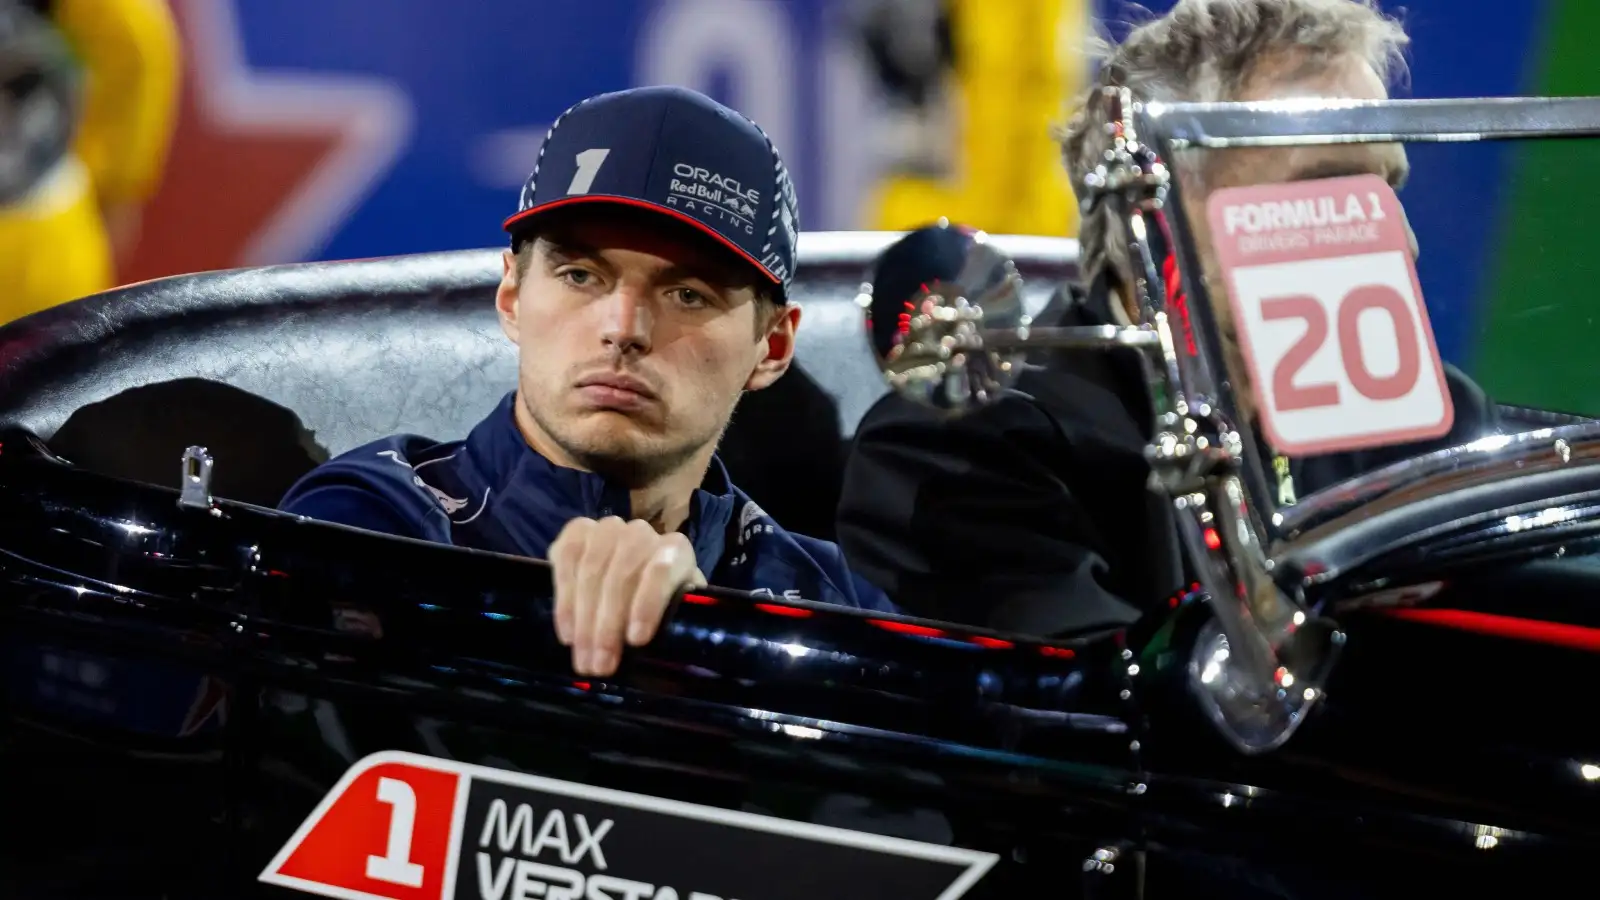 Max Verstappen heads into his parade car ahead of the Las Vegas Grand Prix.